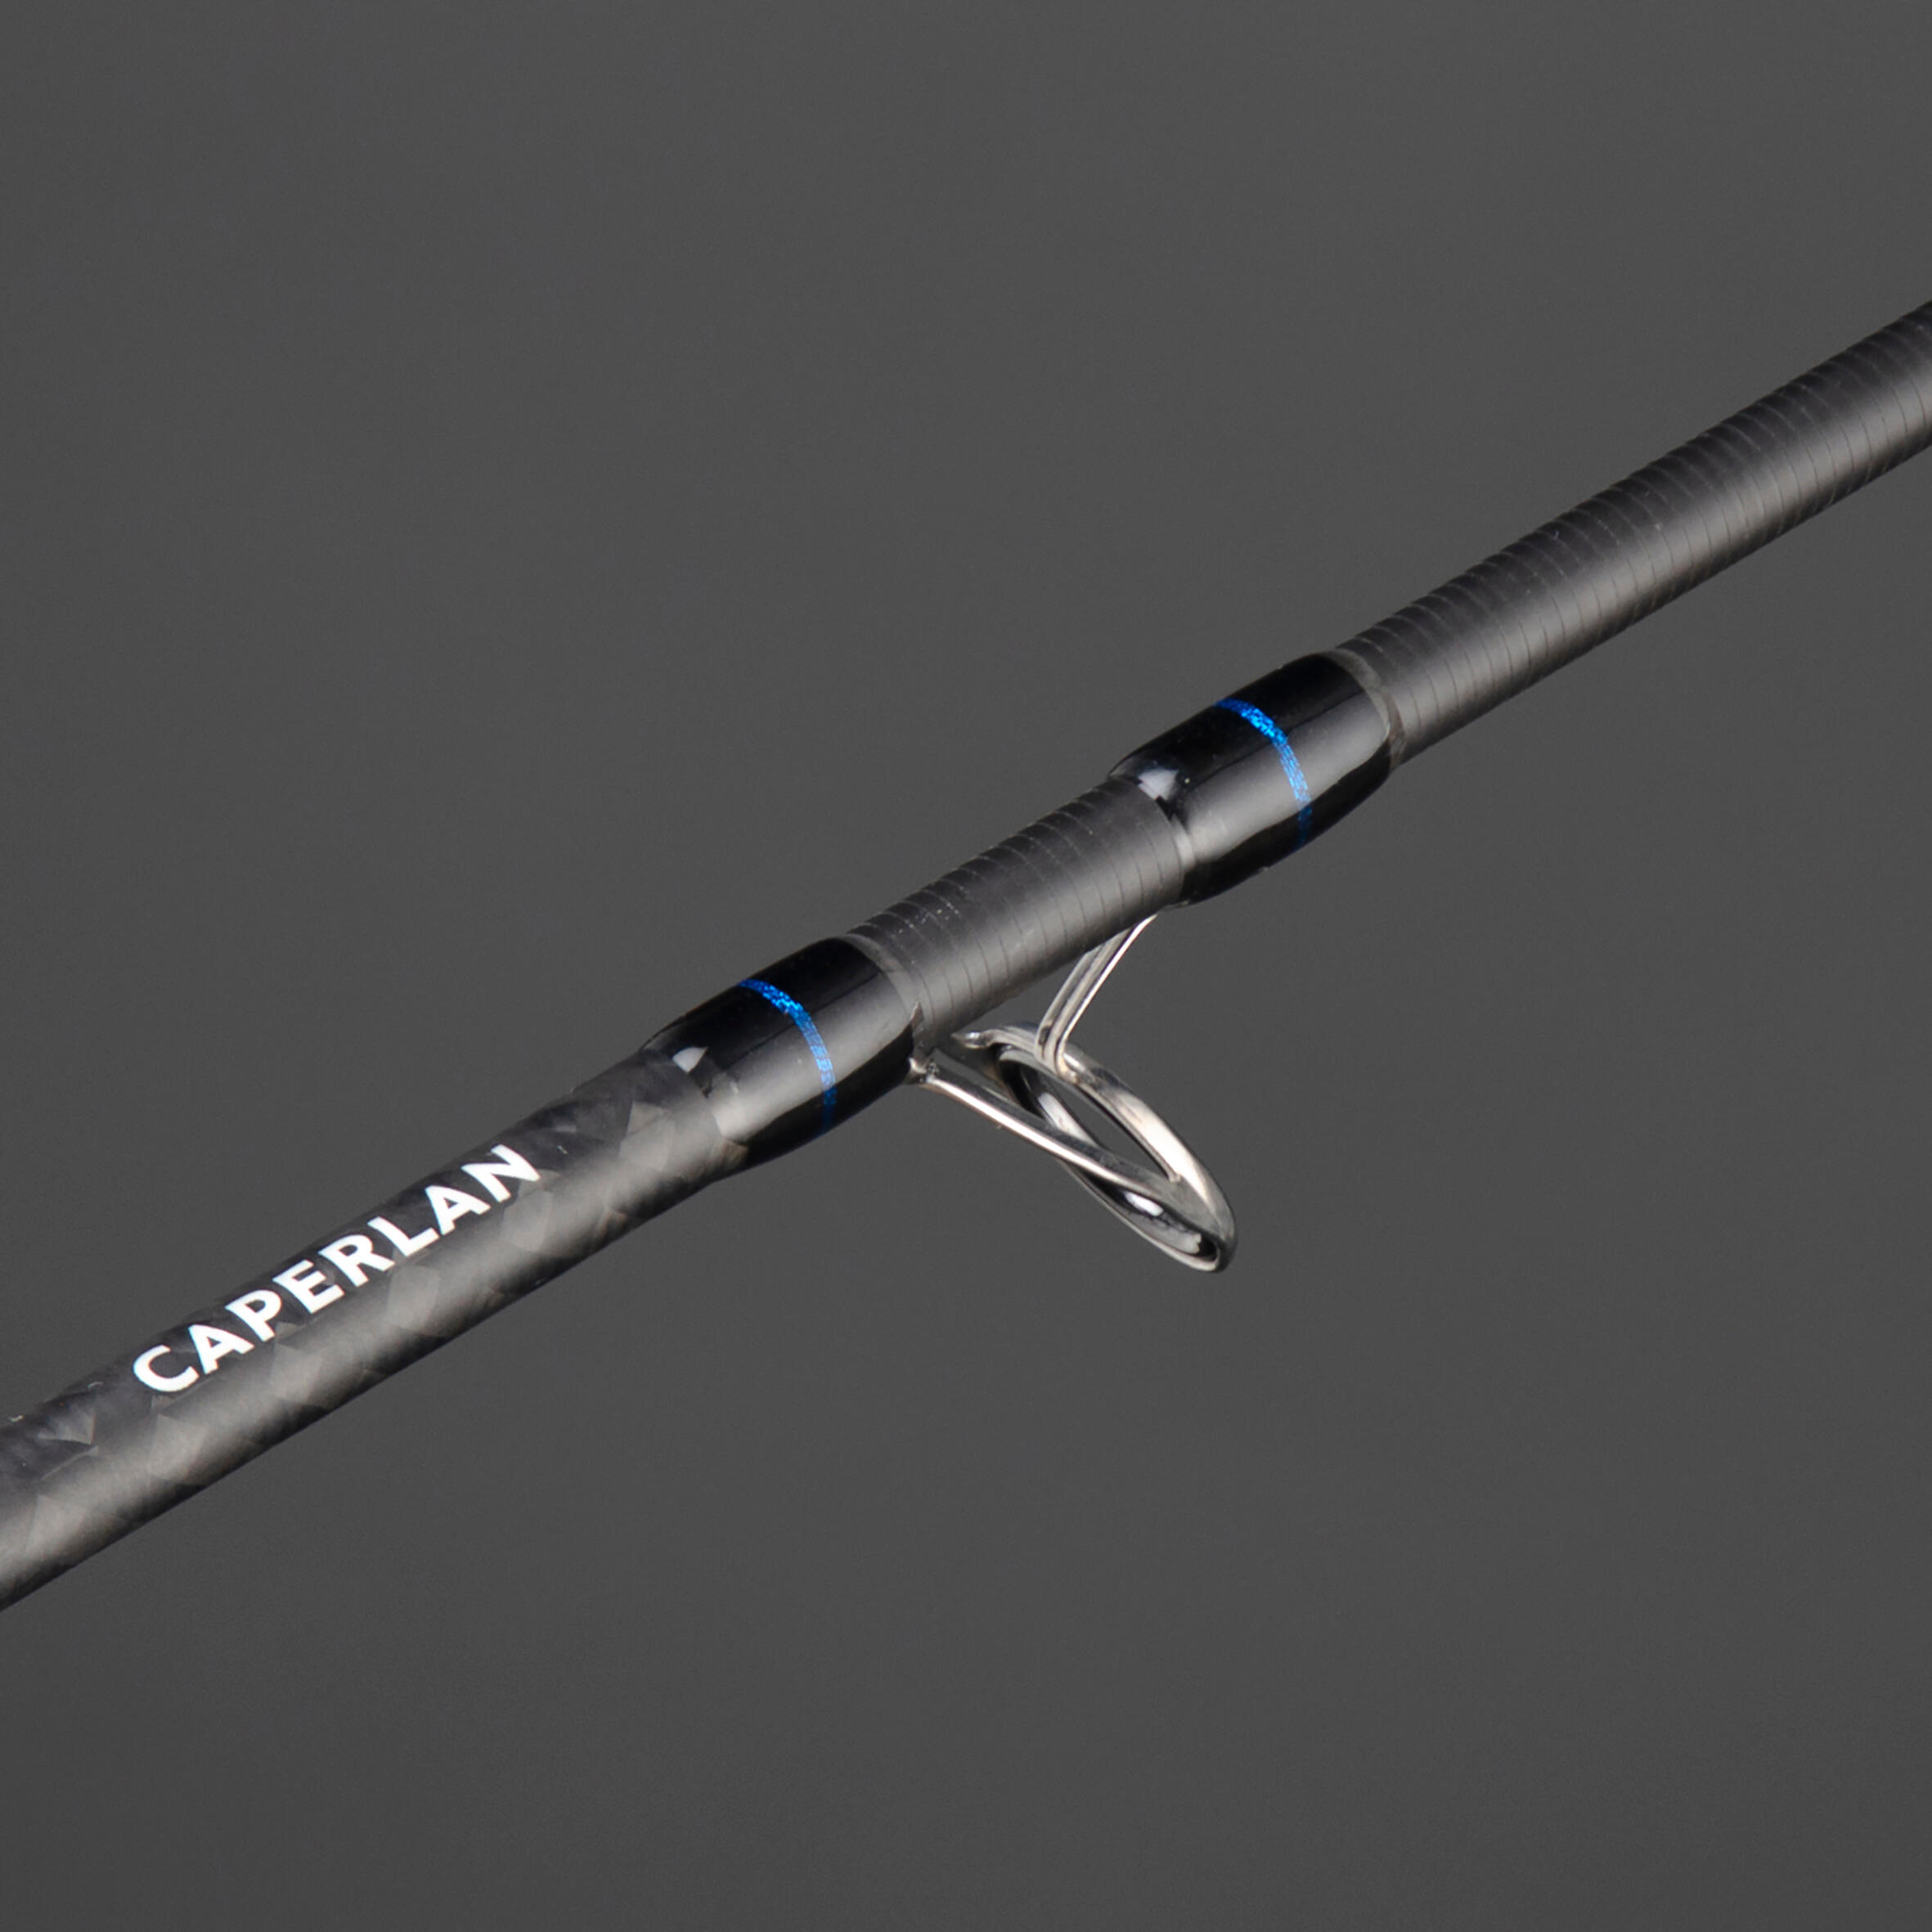 Sea Lure Fishing Rod ILCIUM-500 210 POWER 20-60 g 6/8